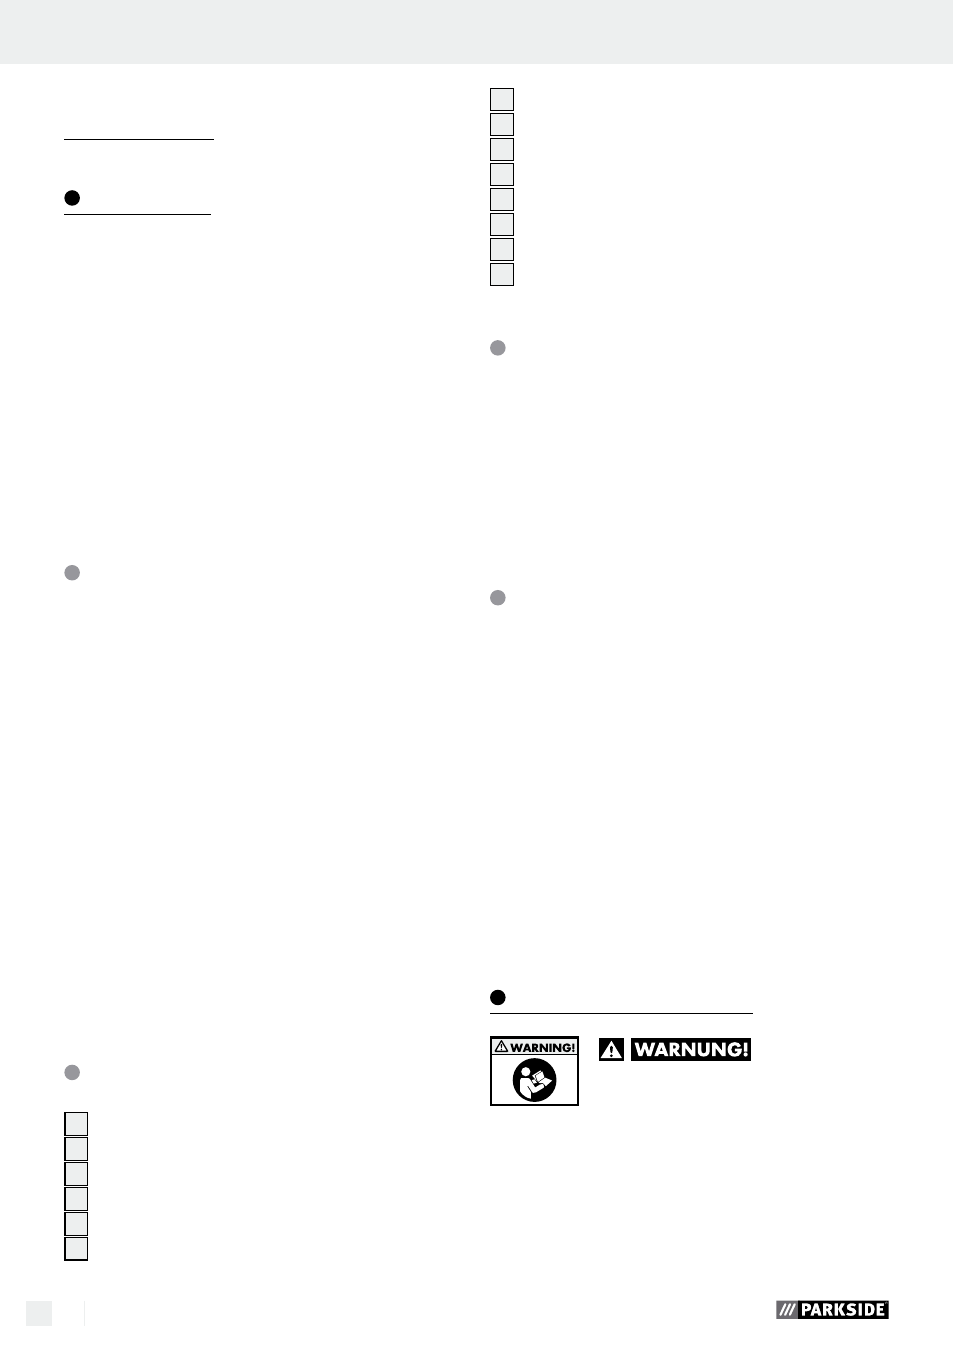 Druckluft-farbspritzpistole pdfp 500 a1 einleitung, Bestimmungsgemäßer  gebrauch, Ausstattung | Parkside PDFP 500 A1 User Manual | Page 6 / 44